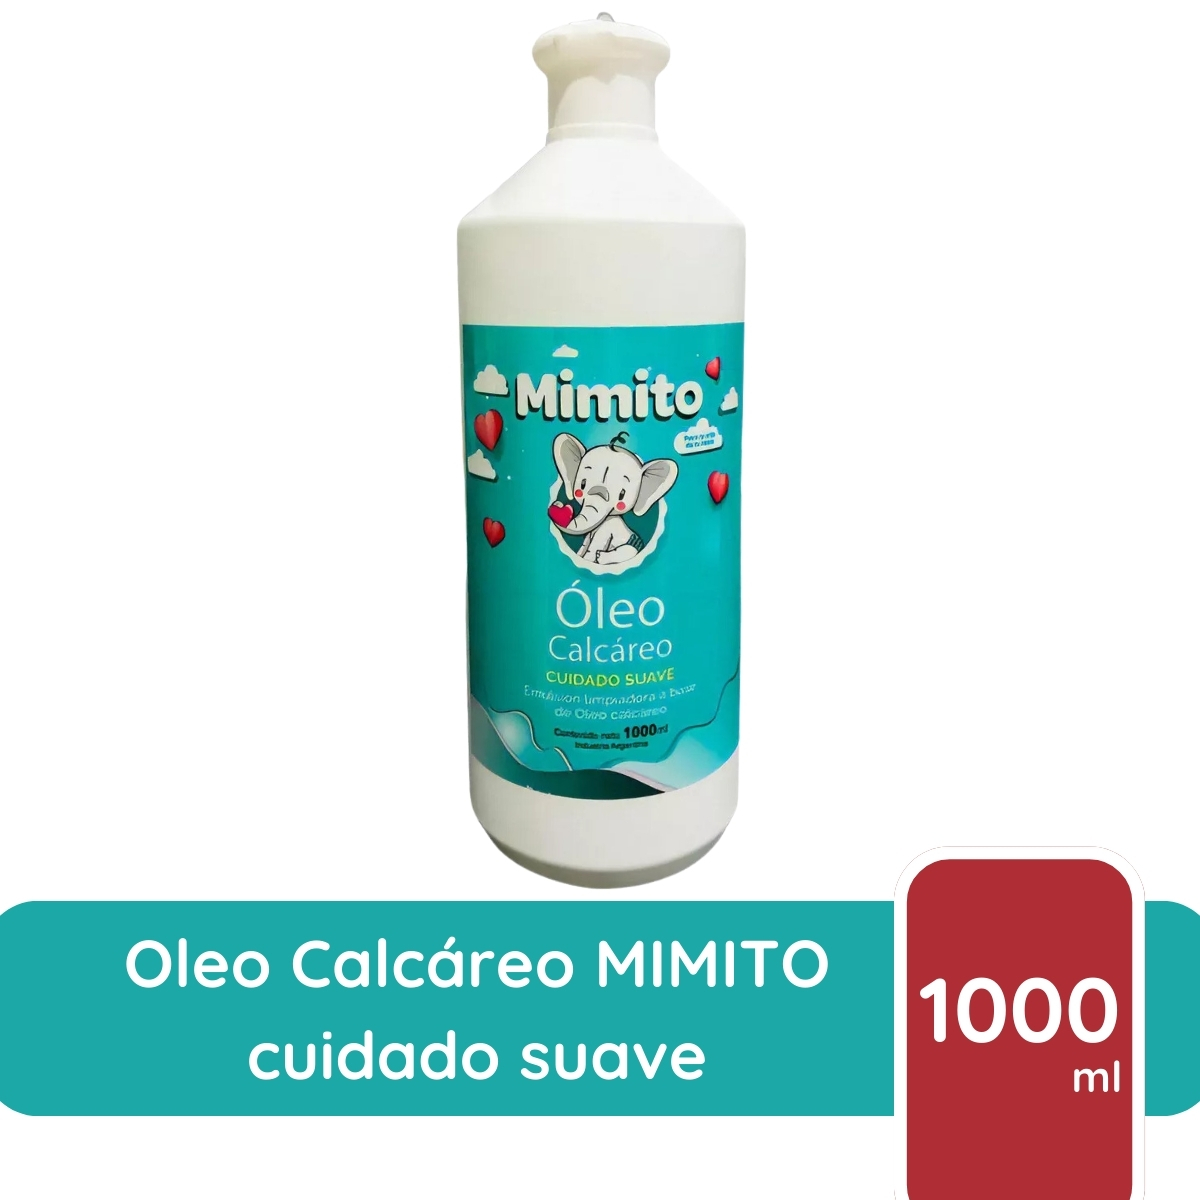 Imagen 1 de 3 de Oleo Calcareo Mimito de 1 Litro